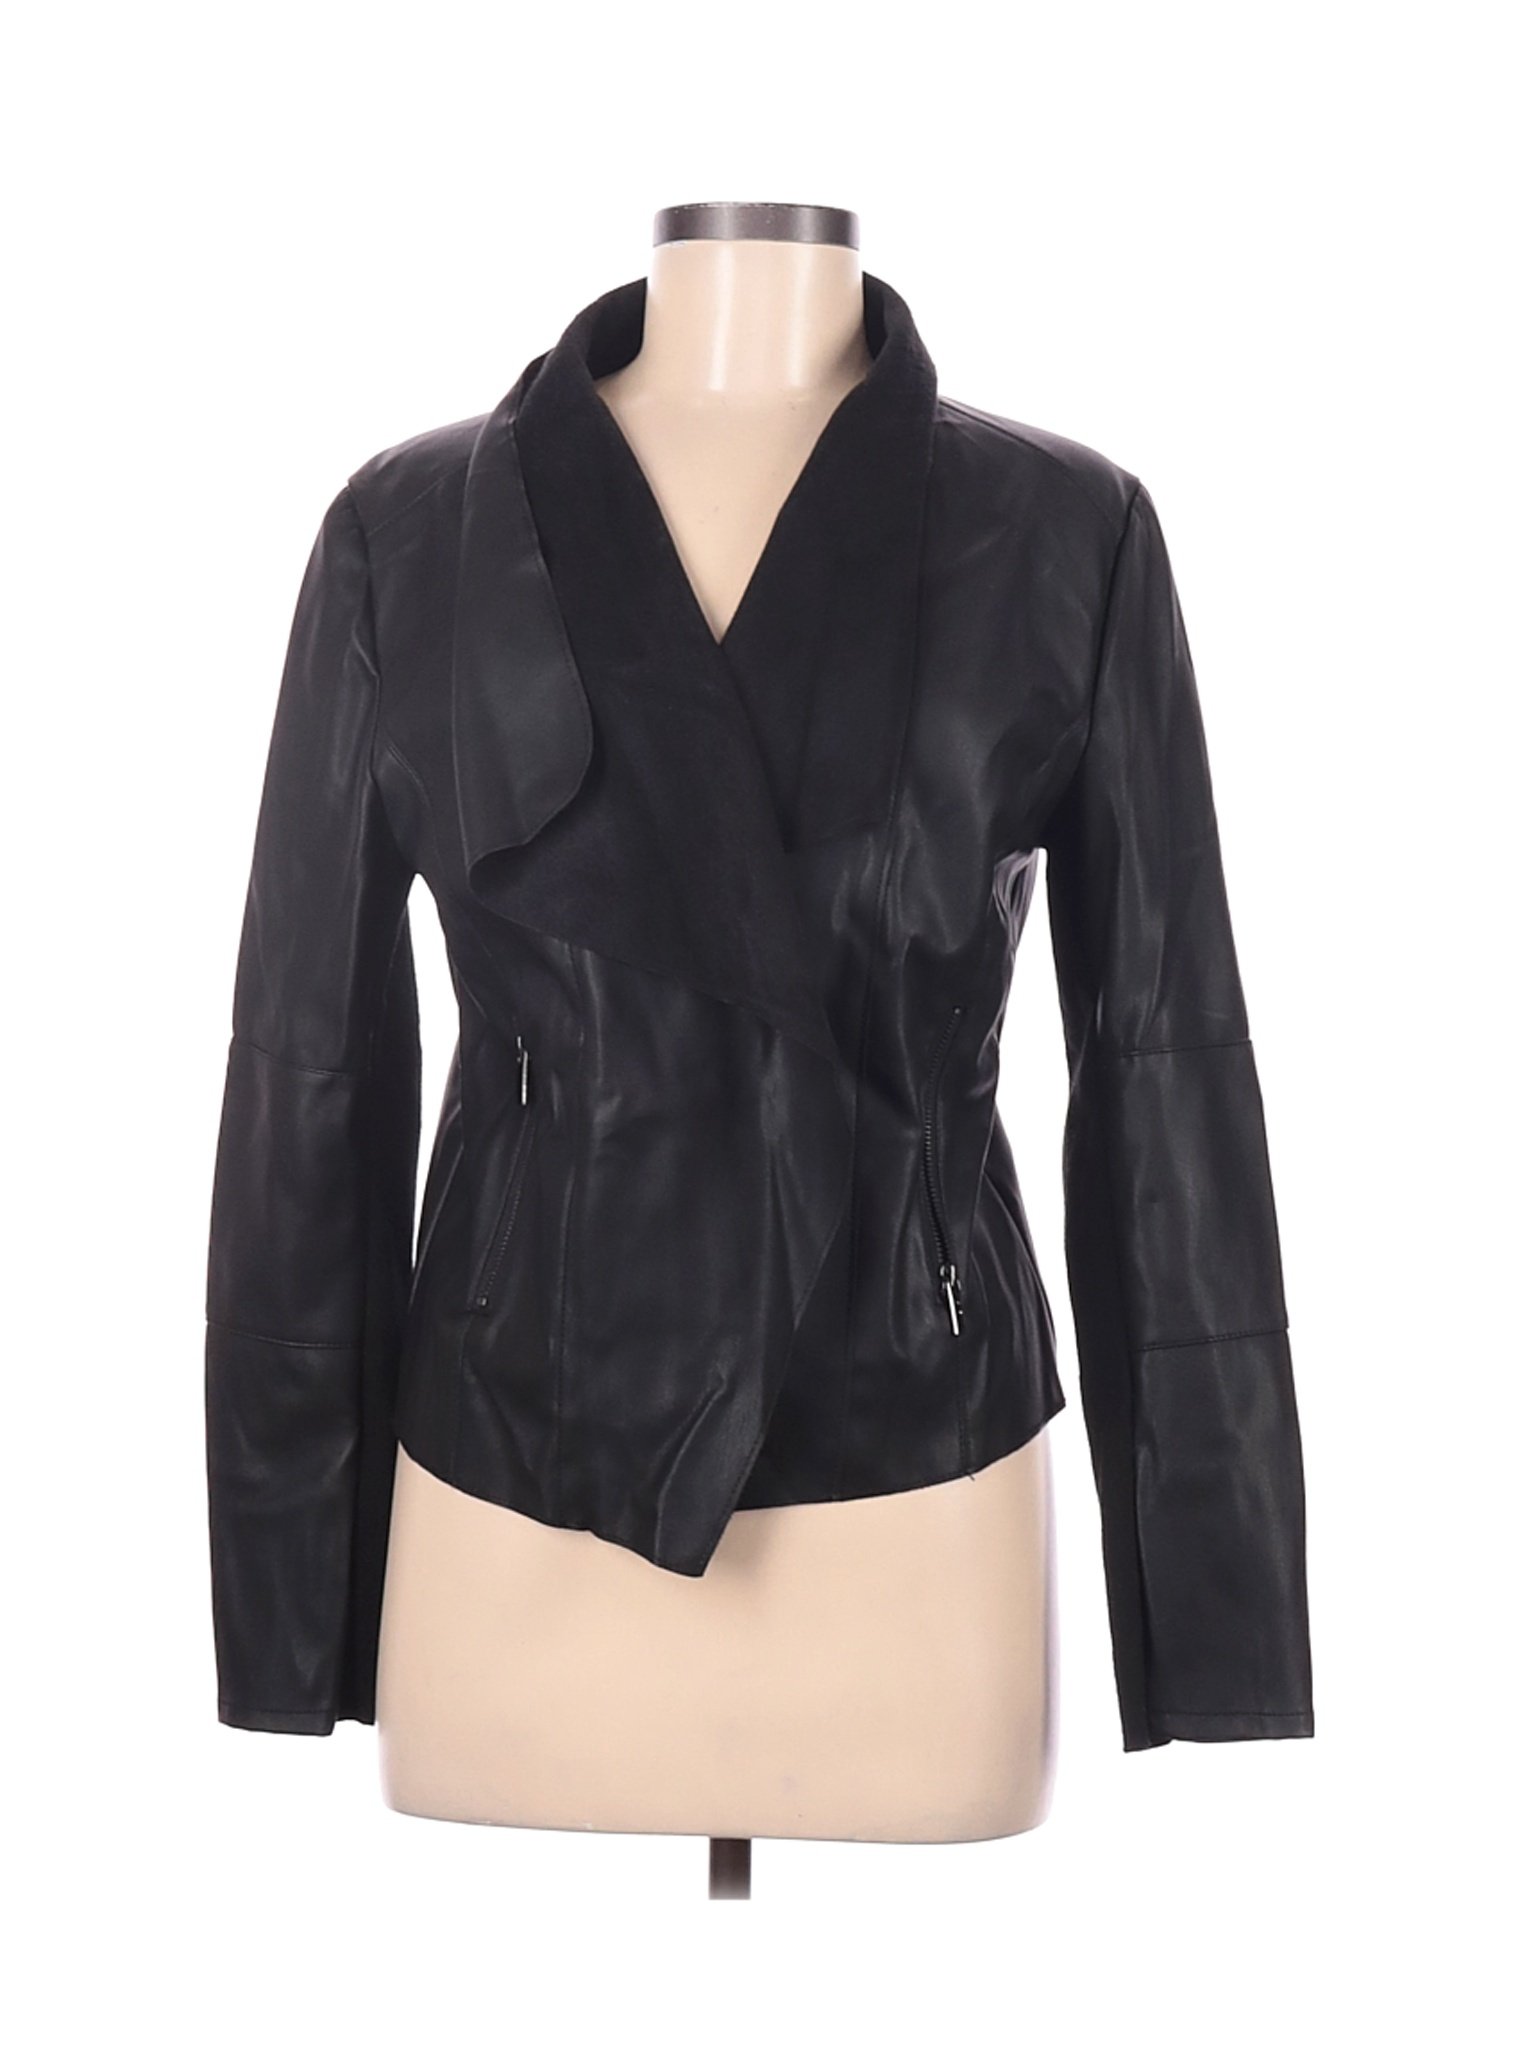 Bagatelle Women Black Leather Jacket M | eBay